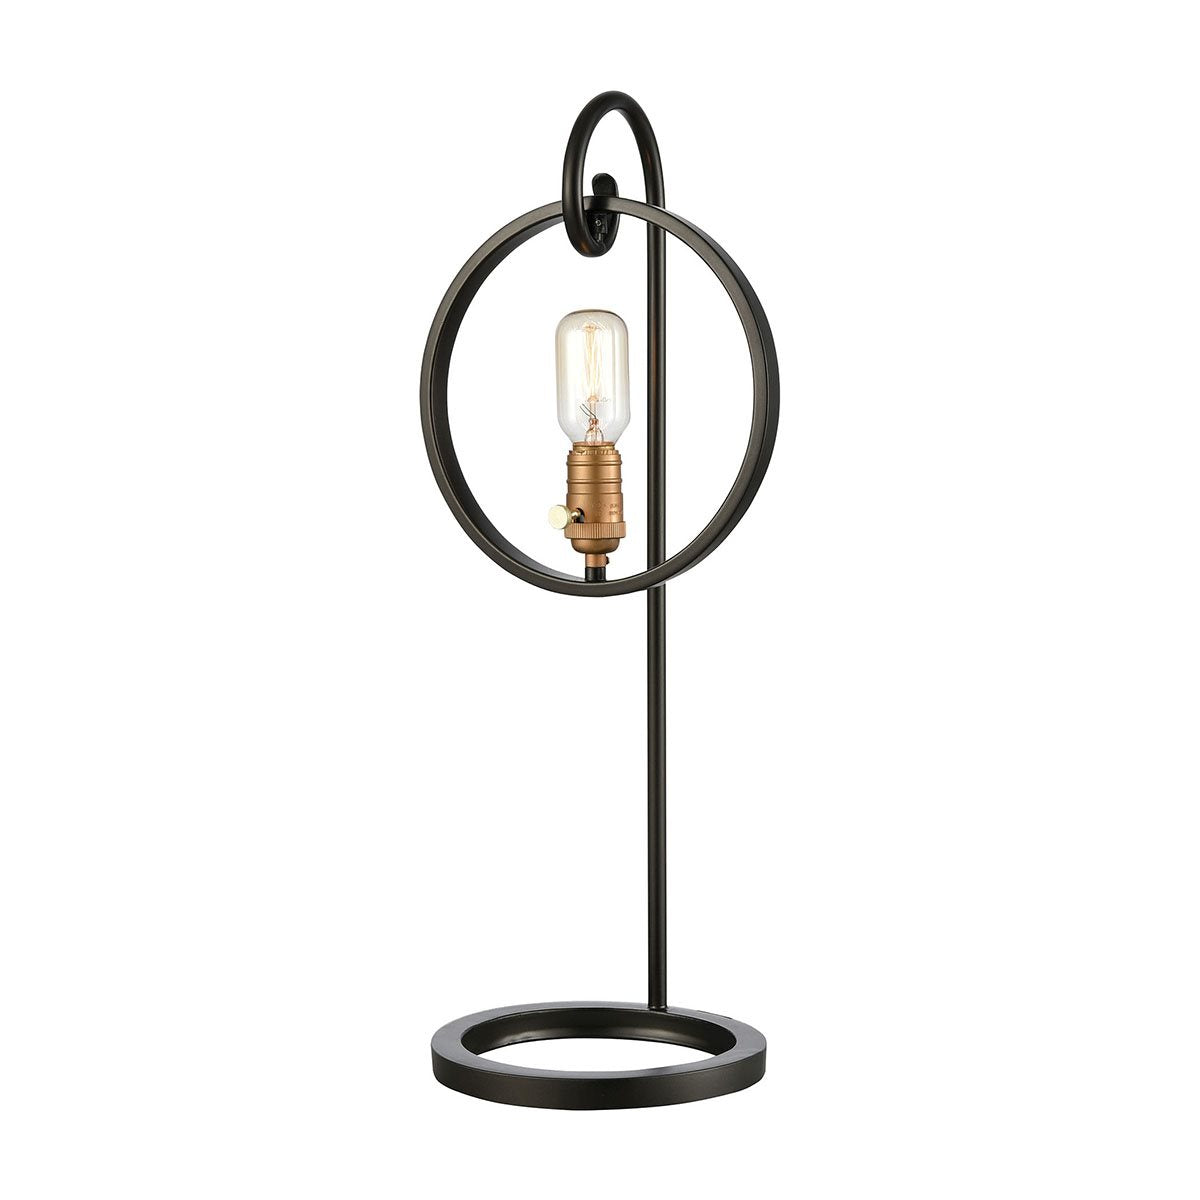 Stein World Nautica Table Lamp 77136